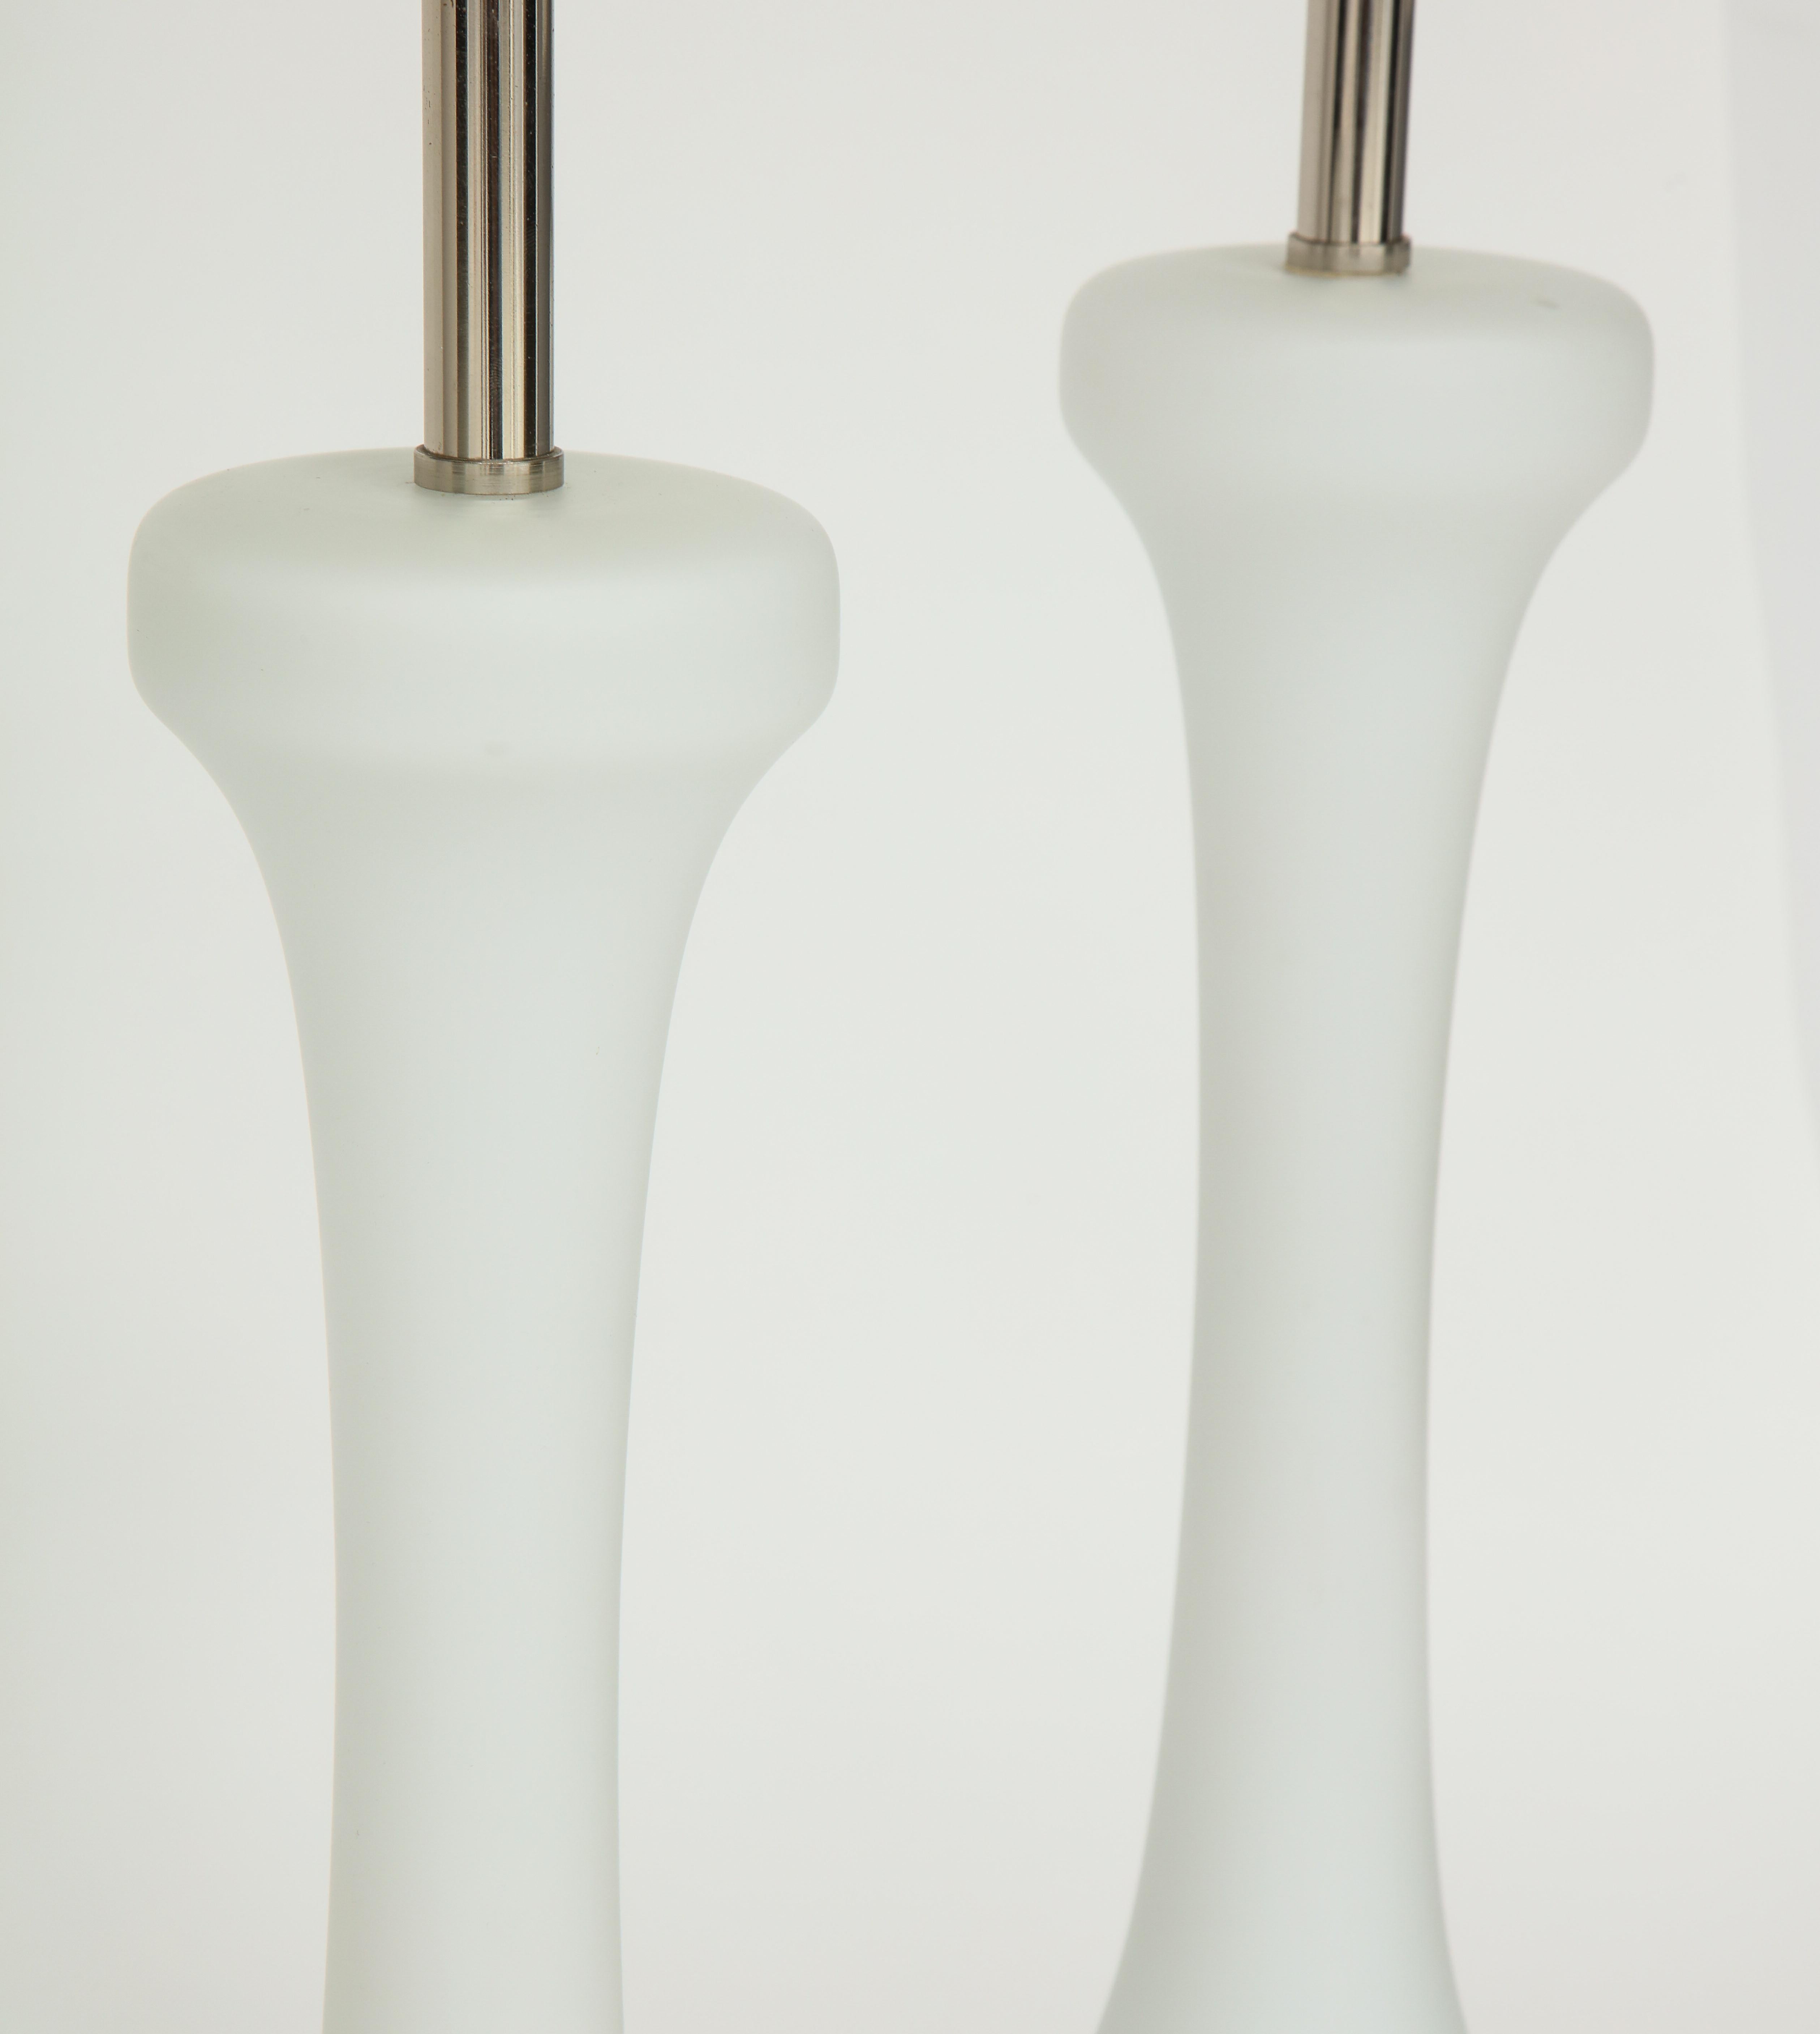 Pair of 1970s Lamps by Laurel Lamp Company (Ende des 20. Jahrhunderts)